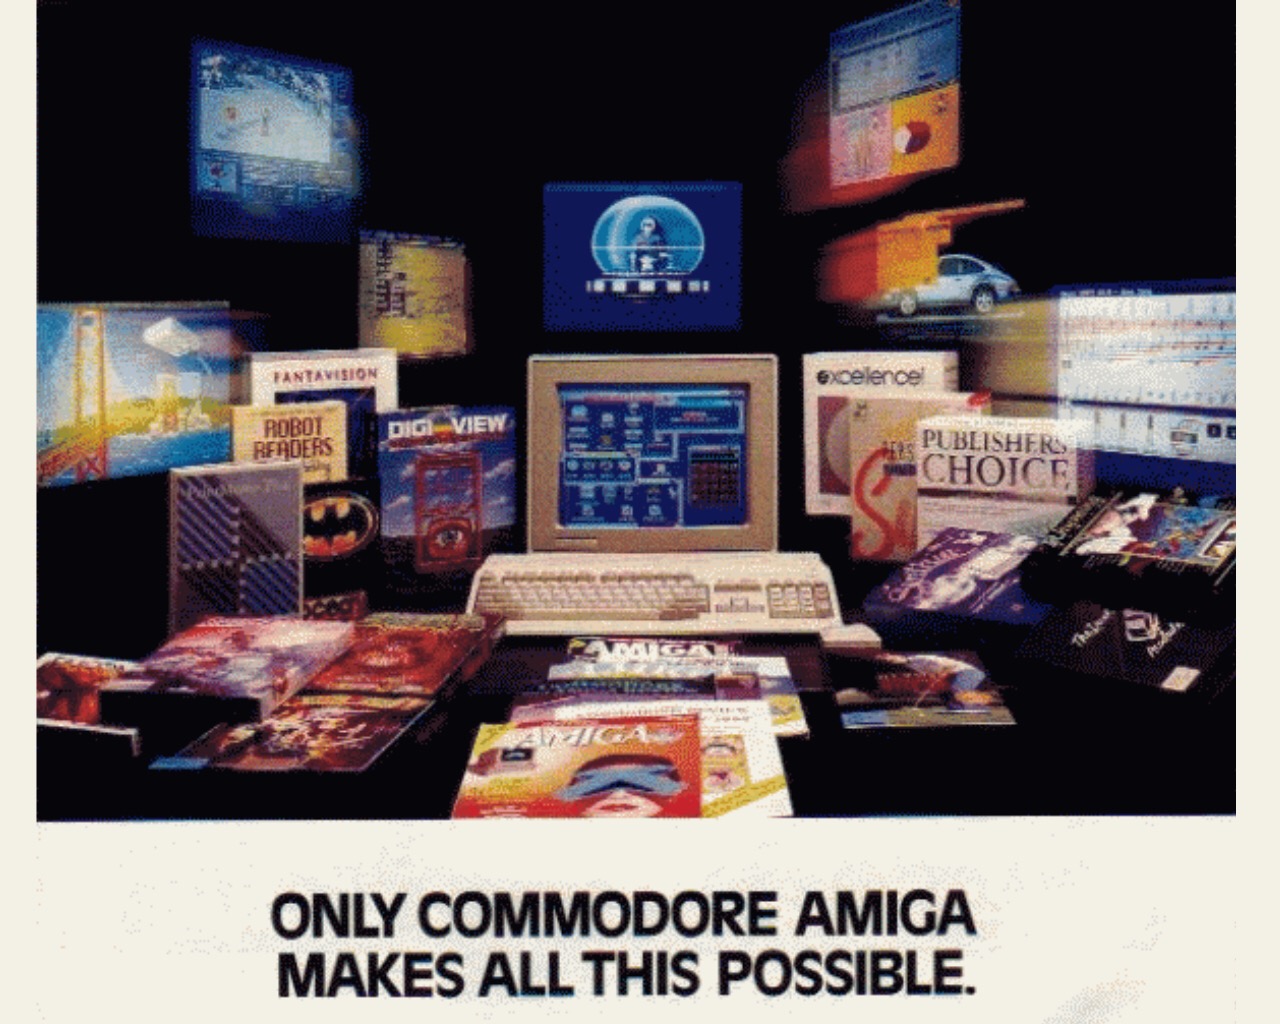 Commodore ignoriert das Potential des genialen Amiga 500